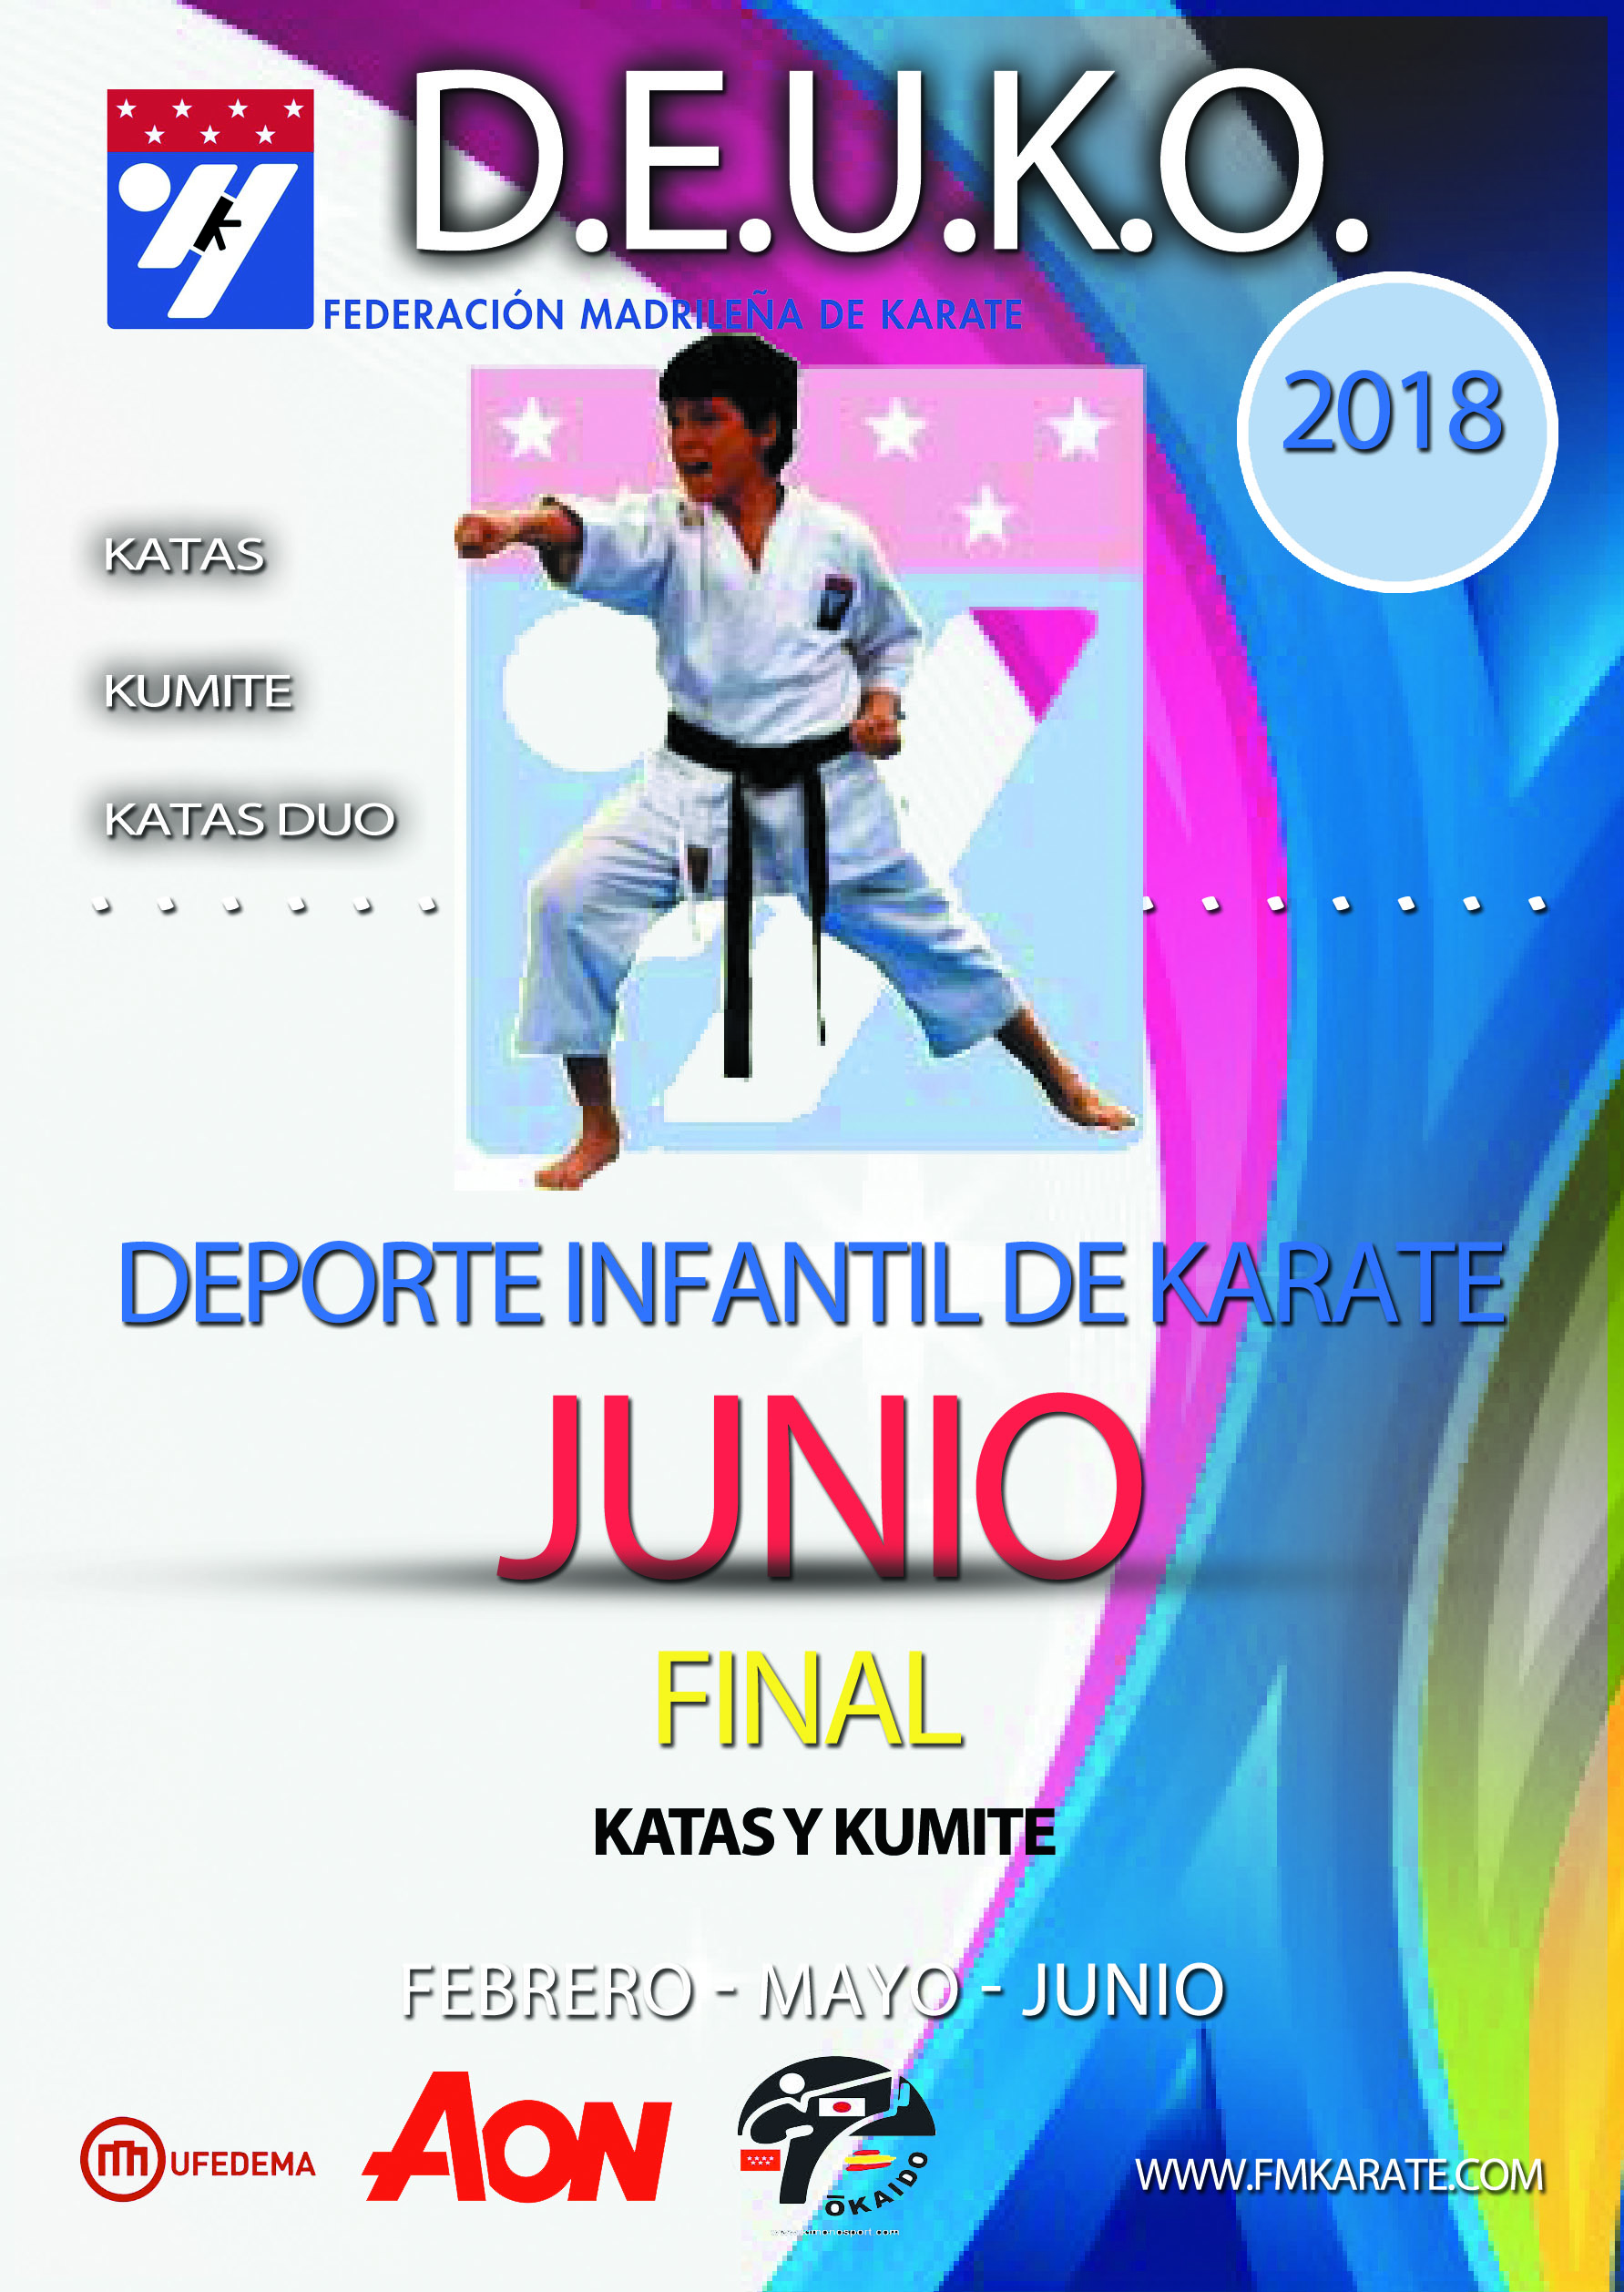 Final Deporte Escolar DEUKO 2018